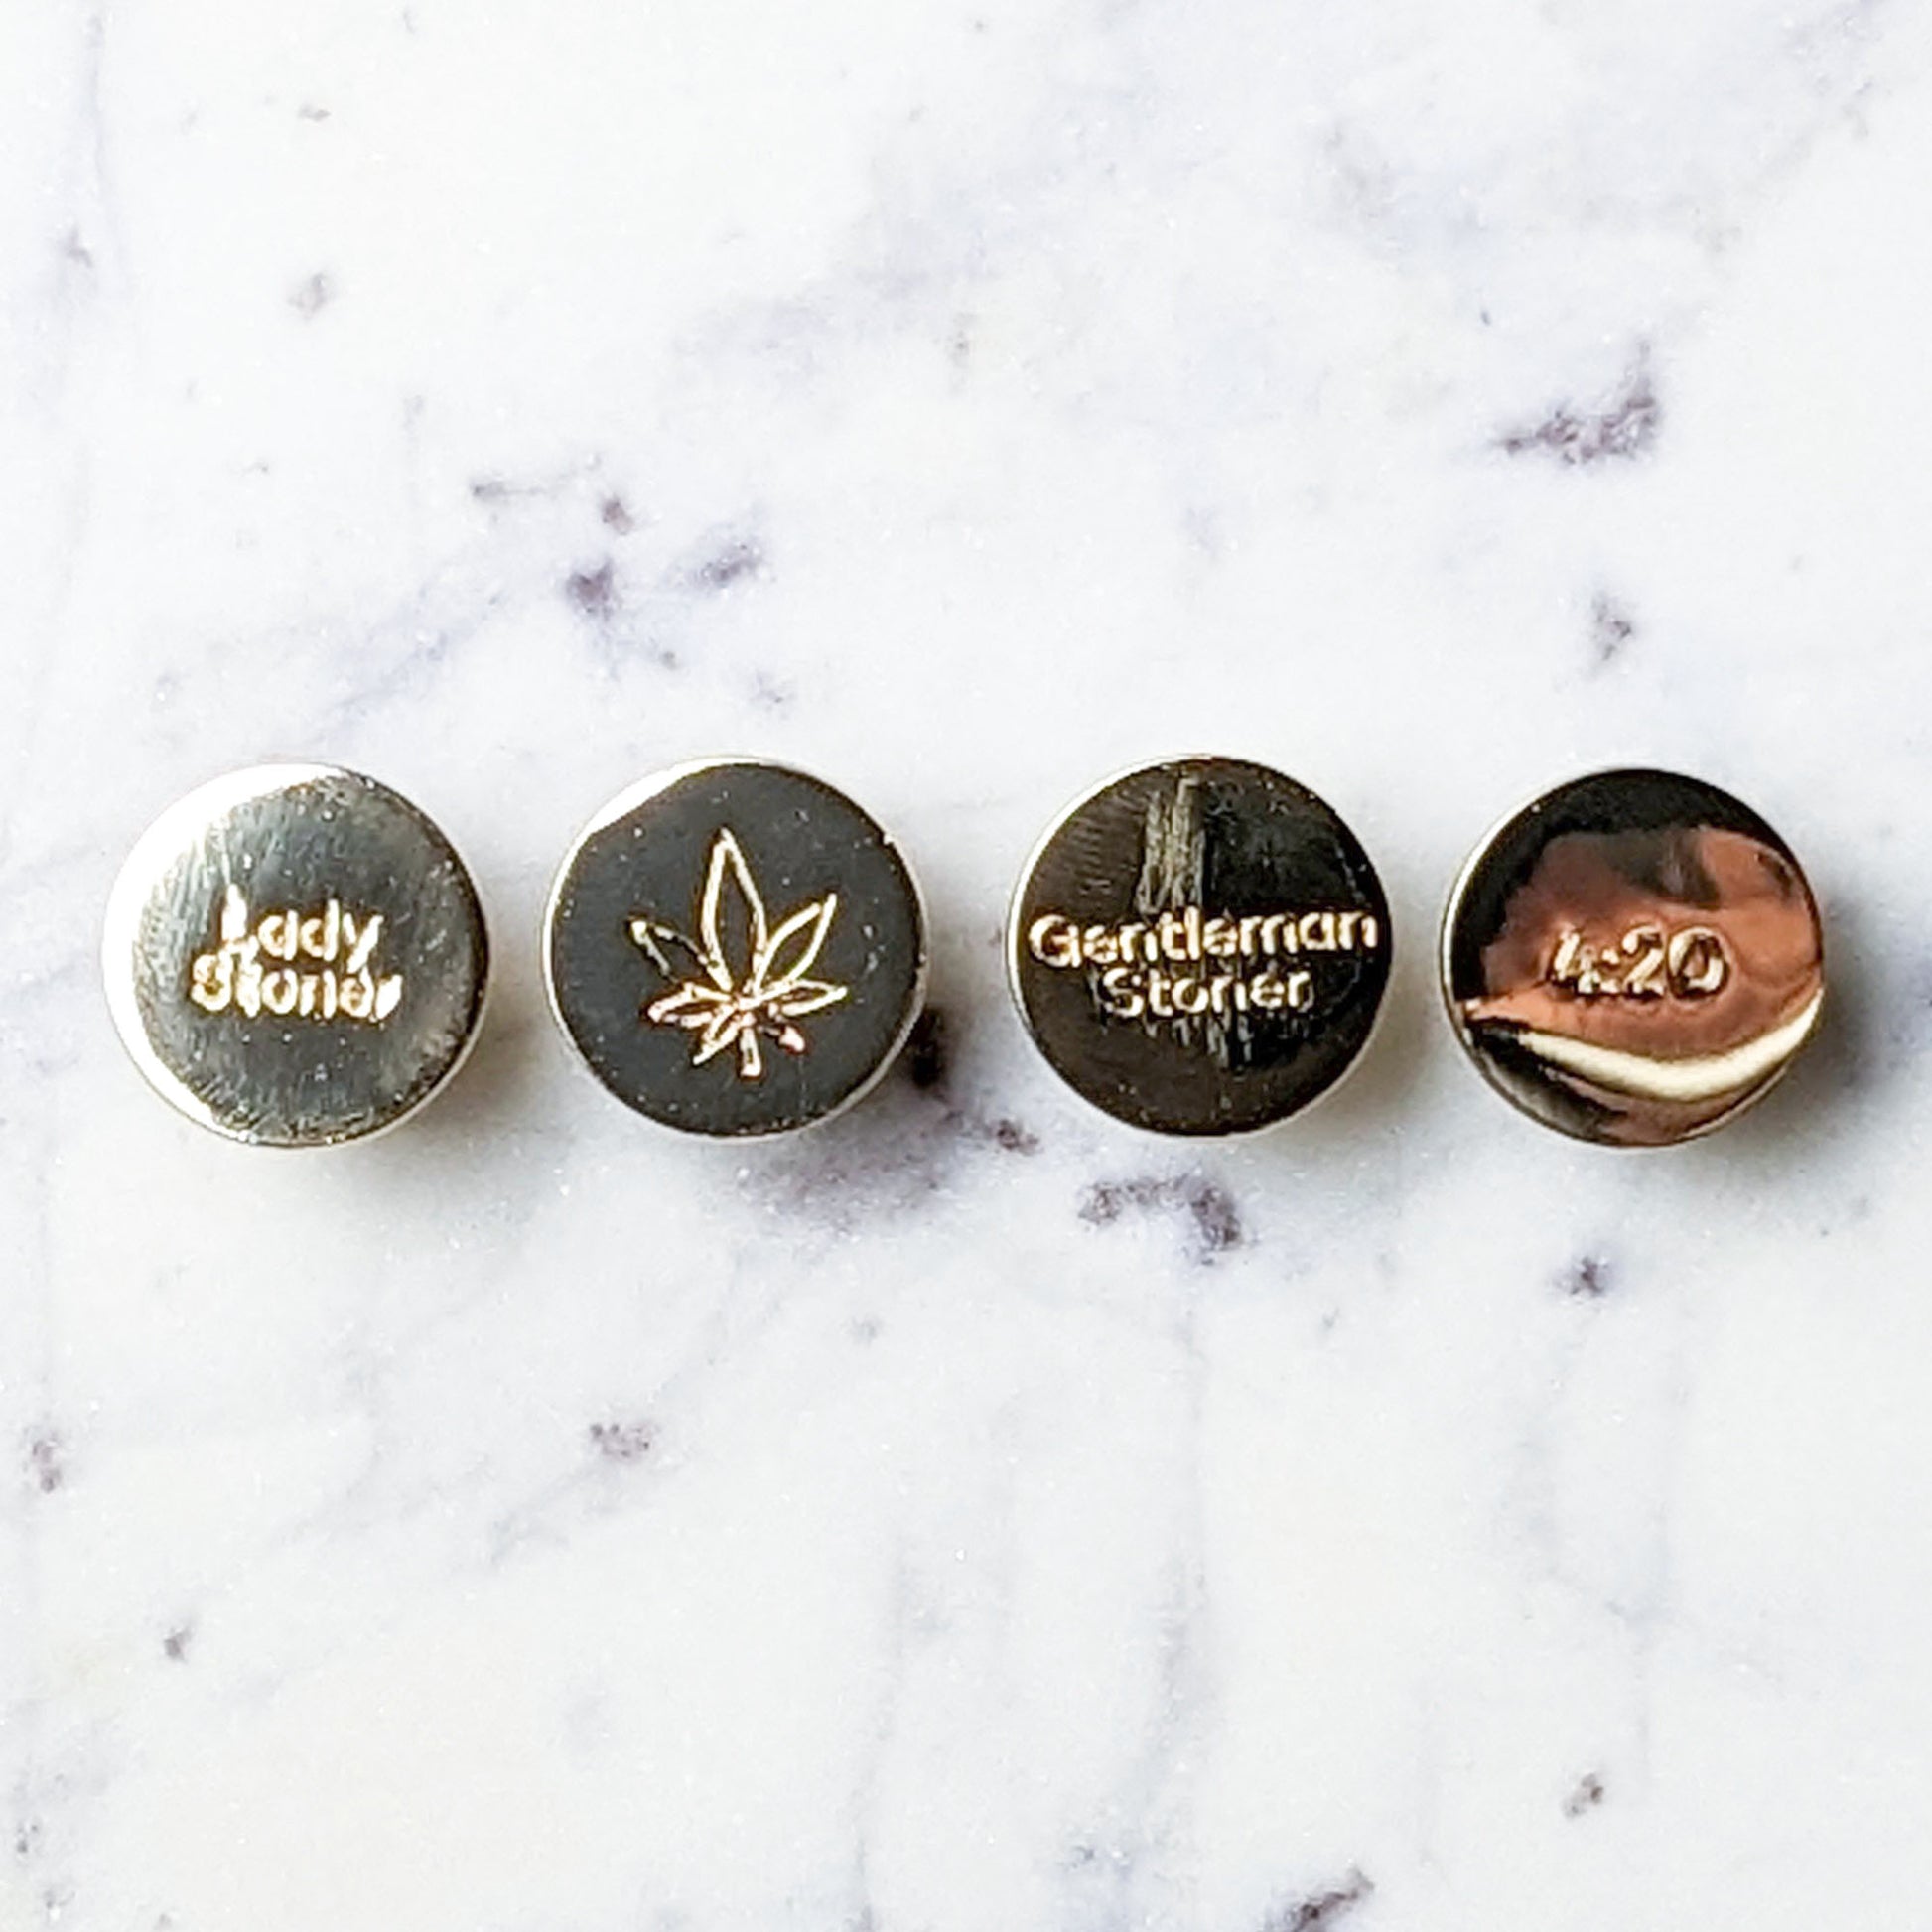 four gold button enamel pins - lady stoner, planta, gentleman stoner and 4:20 